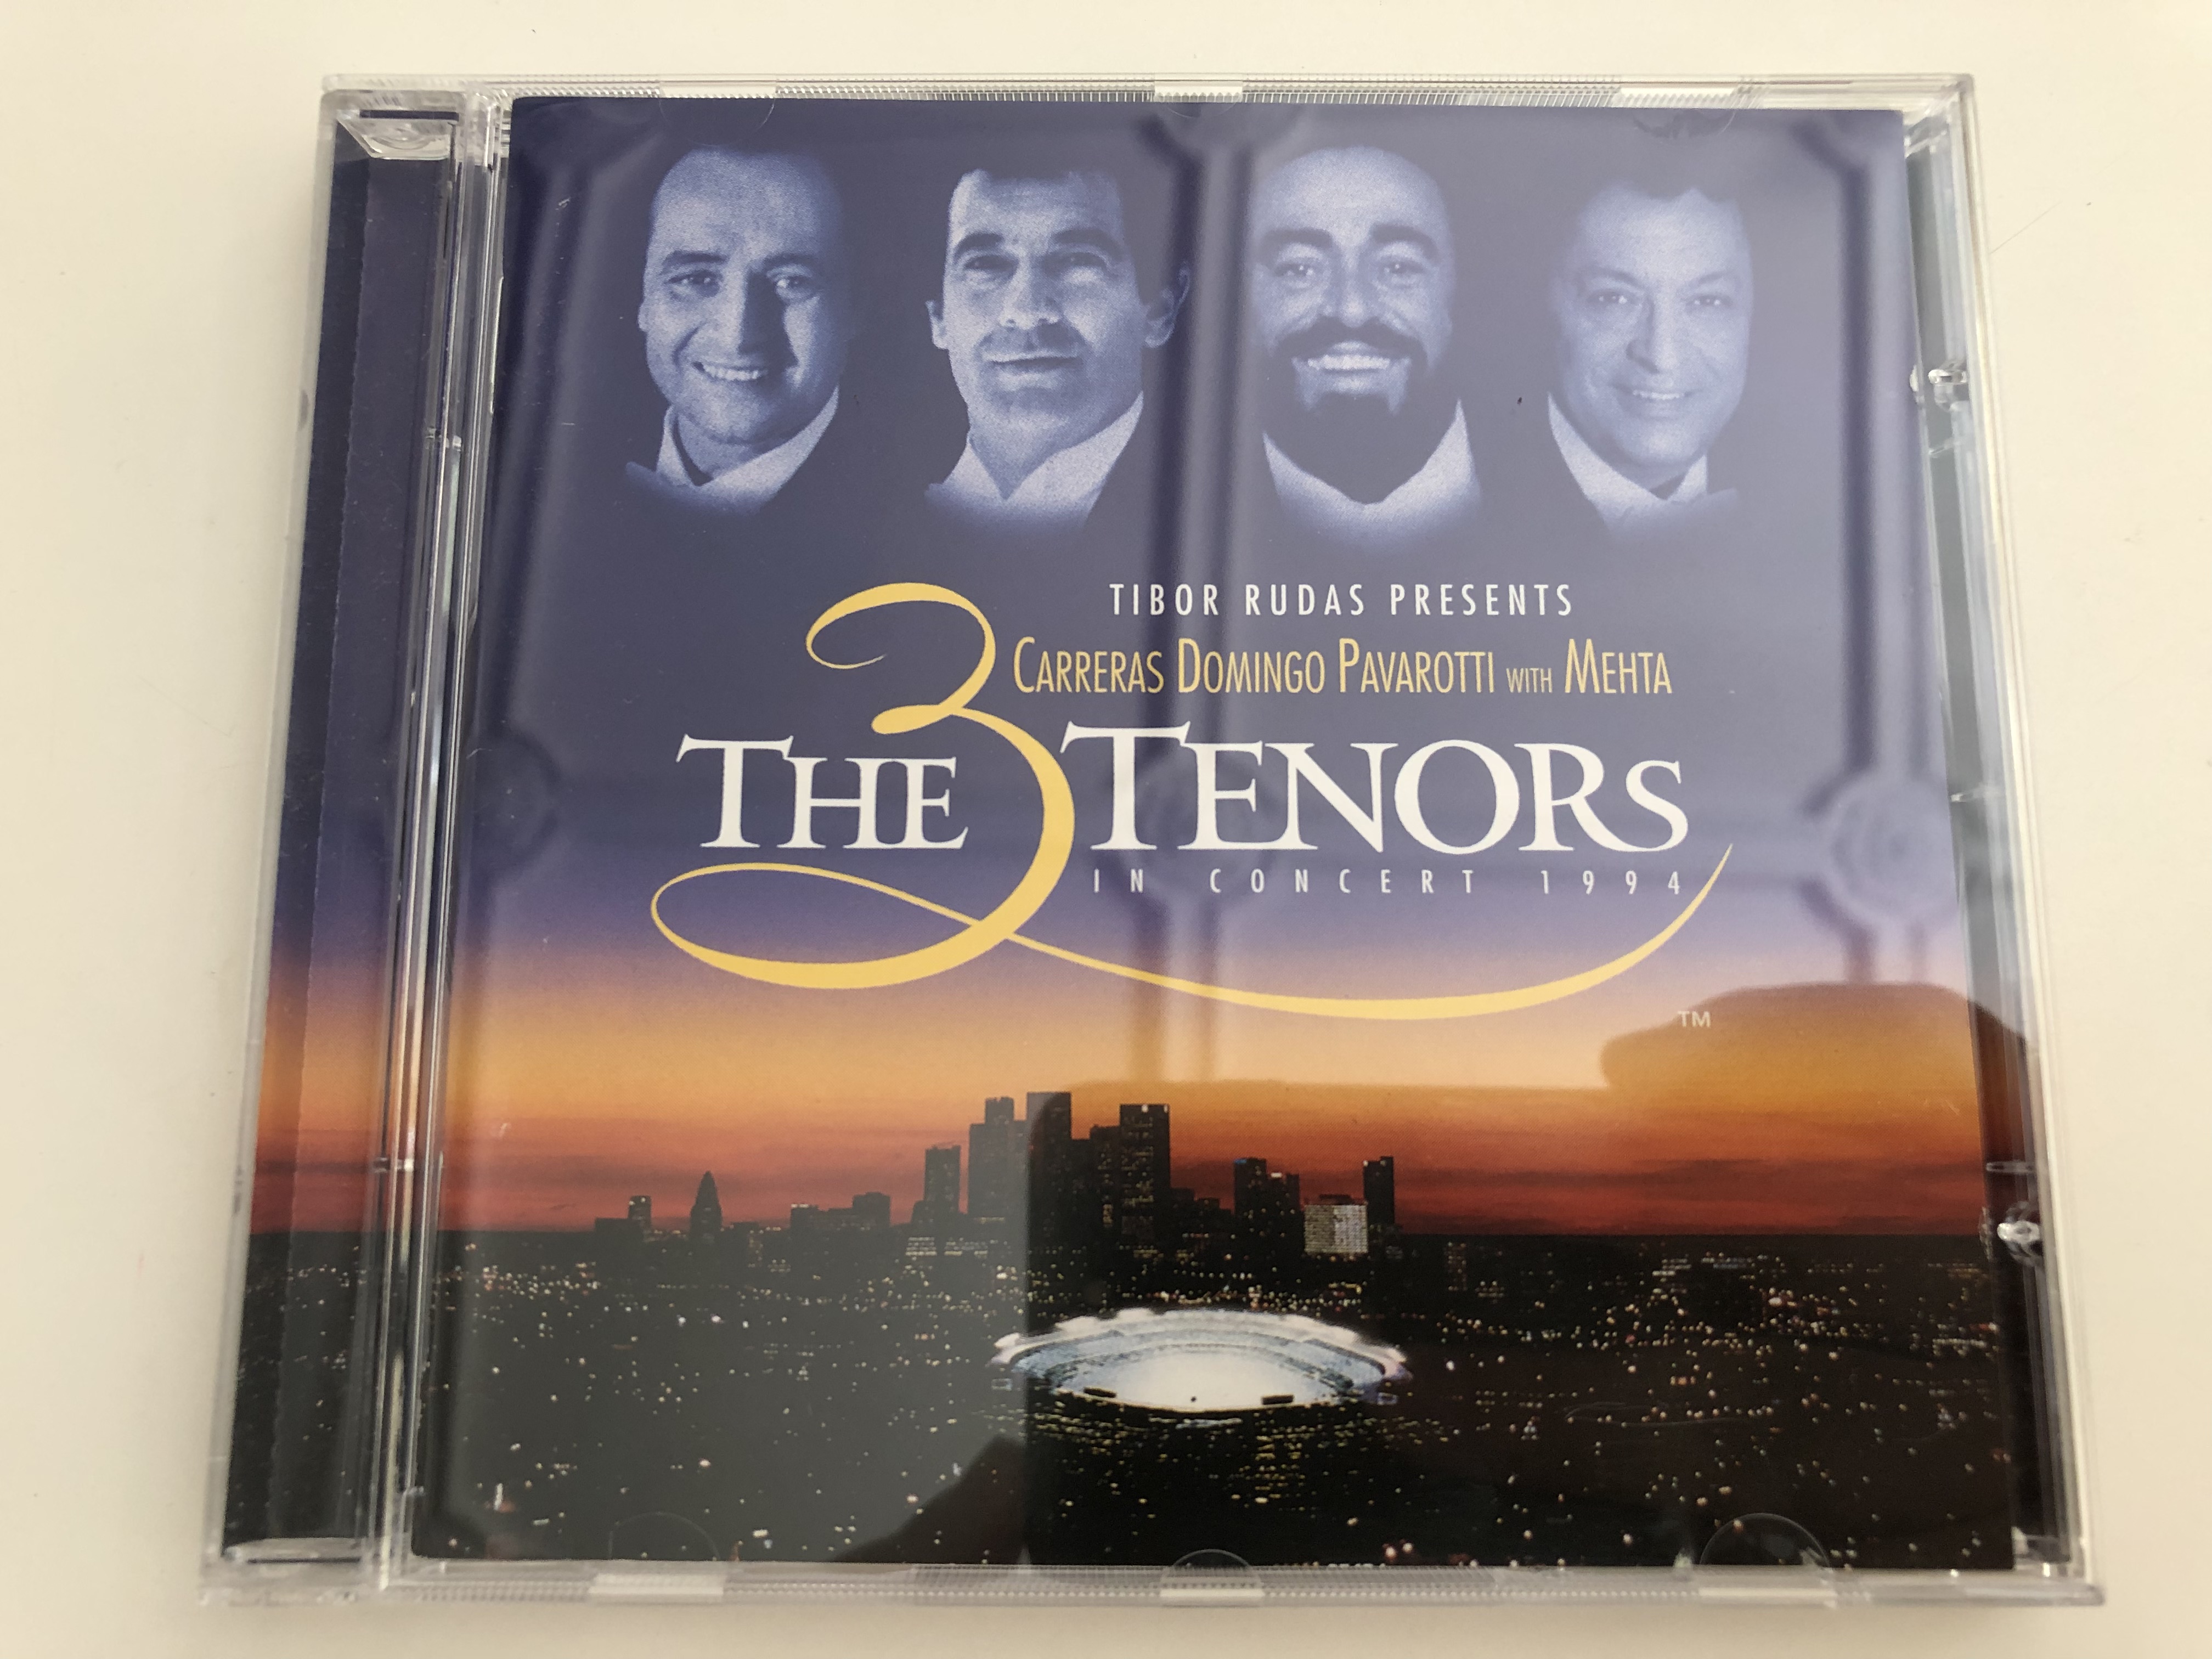 the-3-tenors-in-concert-1994-carreras-domingo-pavarotti-with-mehta-audio-cd-1994-teldec-we-805-1-.jpg